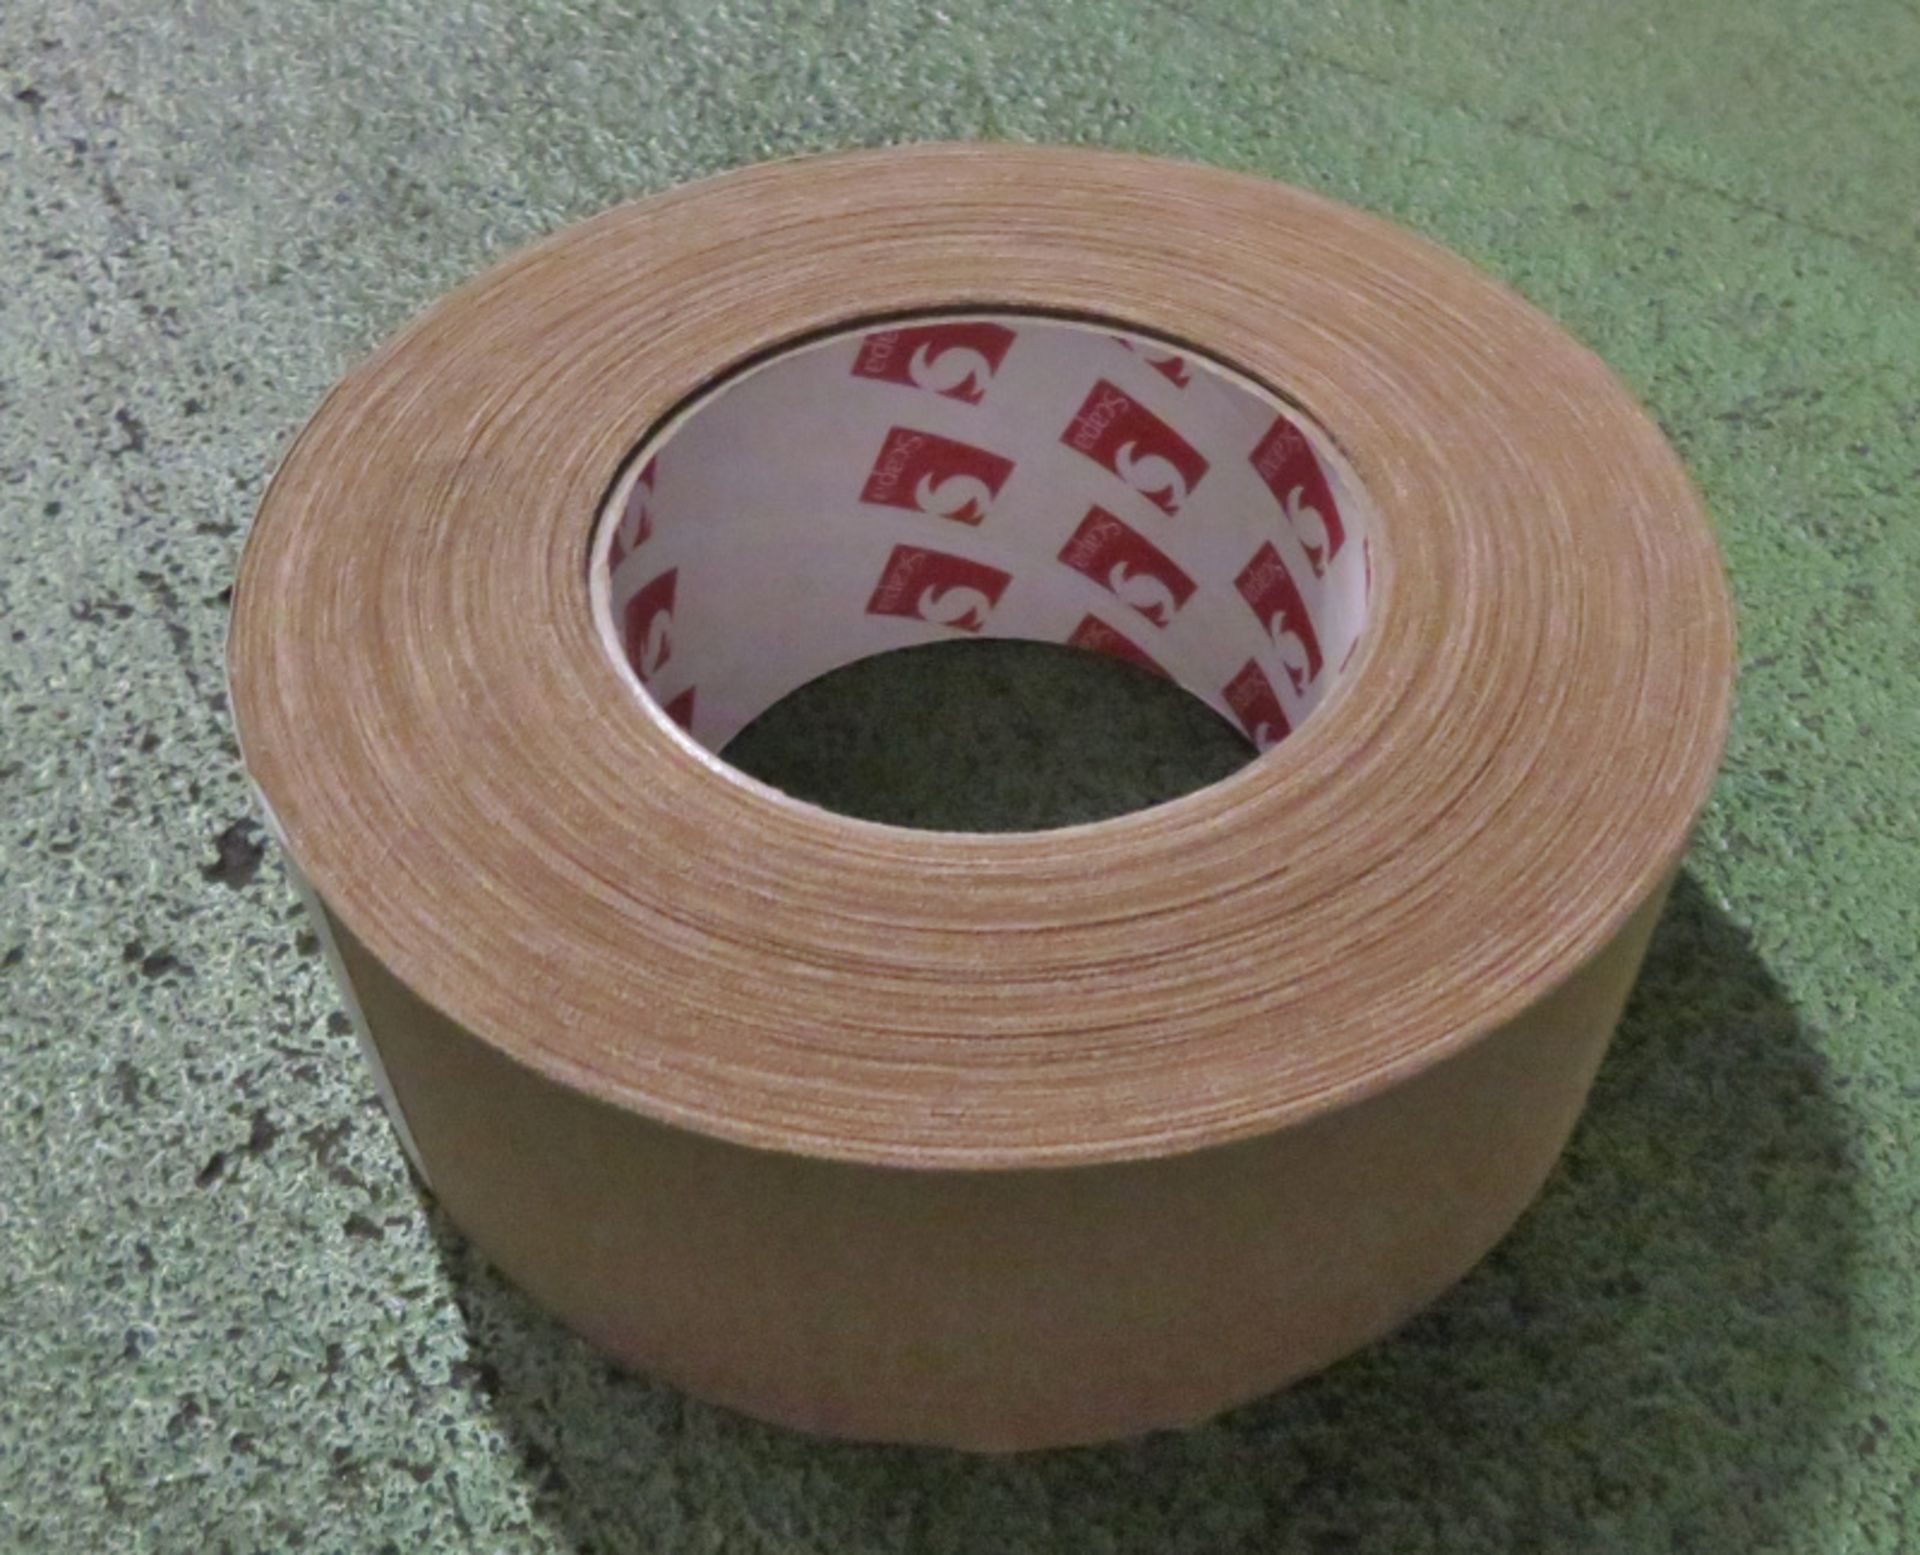 Scapa Pro 3302 Beige Cloth Adhesive Tape - 50mm x 50m - 1 Box - 16 rolls - Image 3 of 3